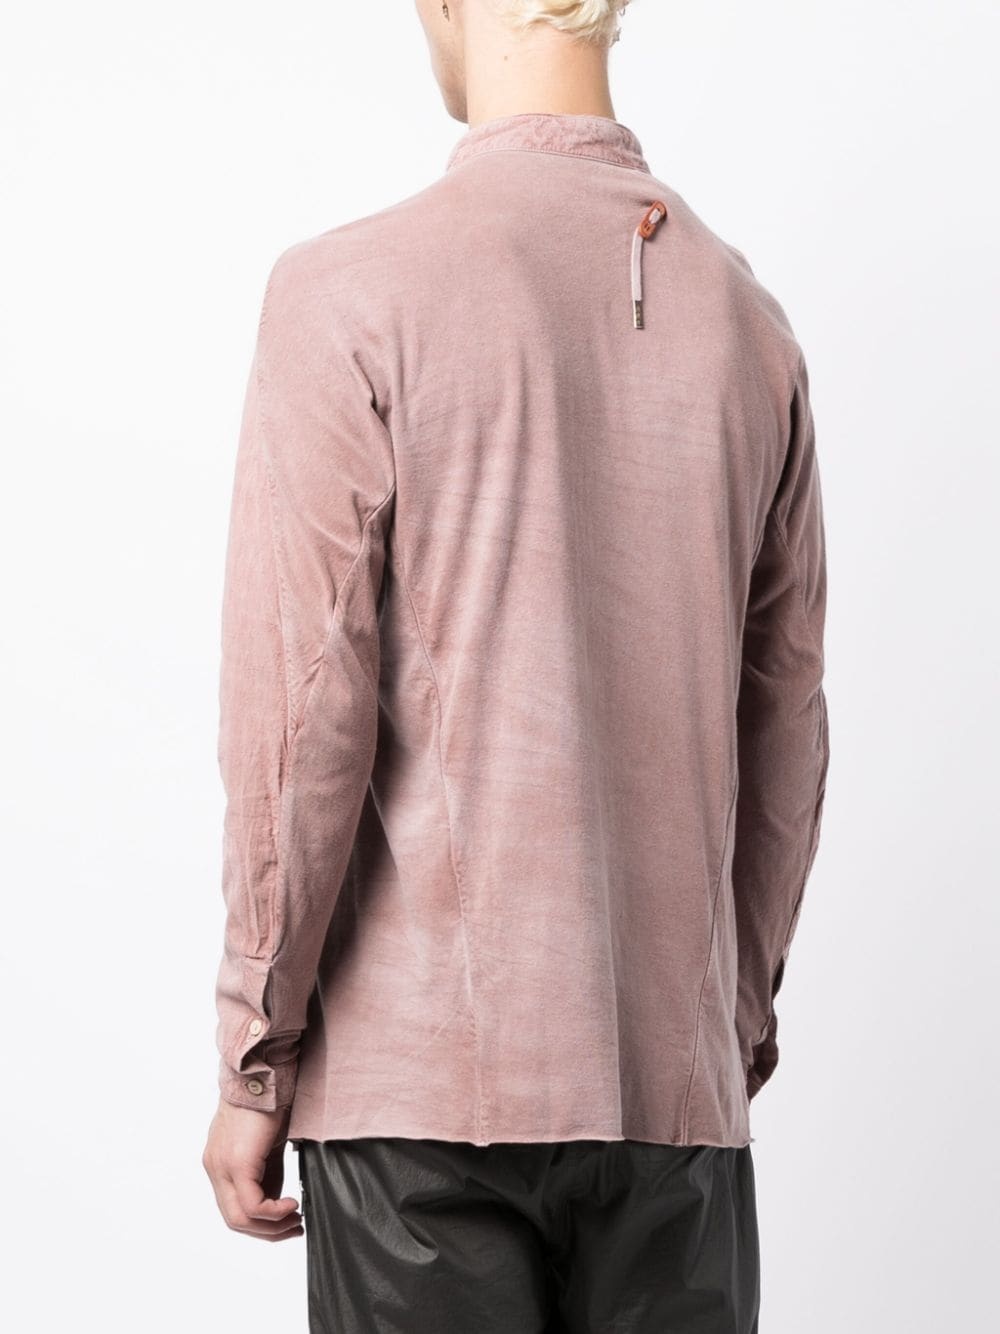 stand-up collar cotton shirt - 4